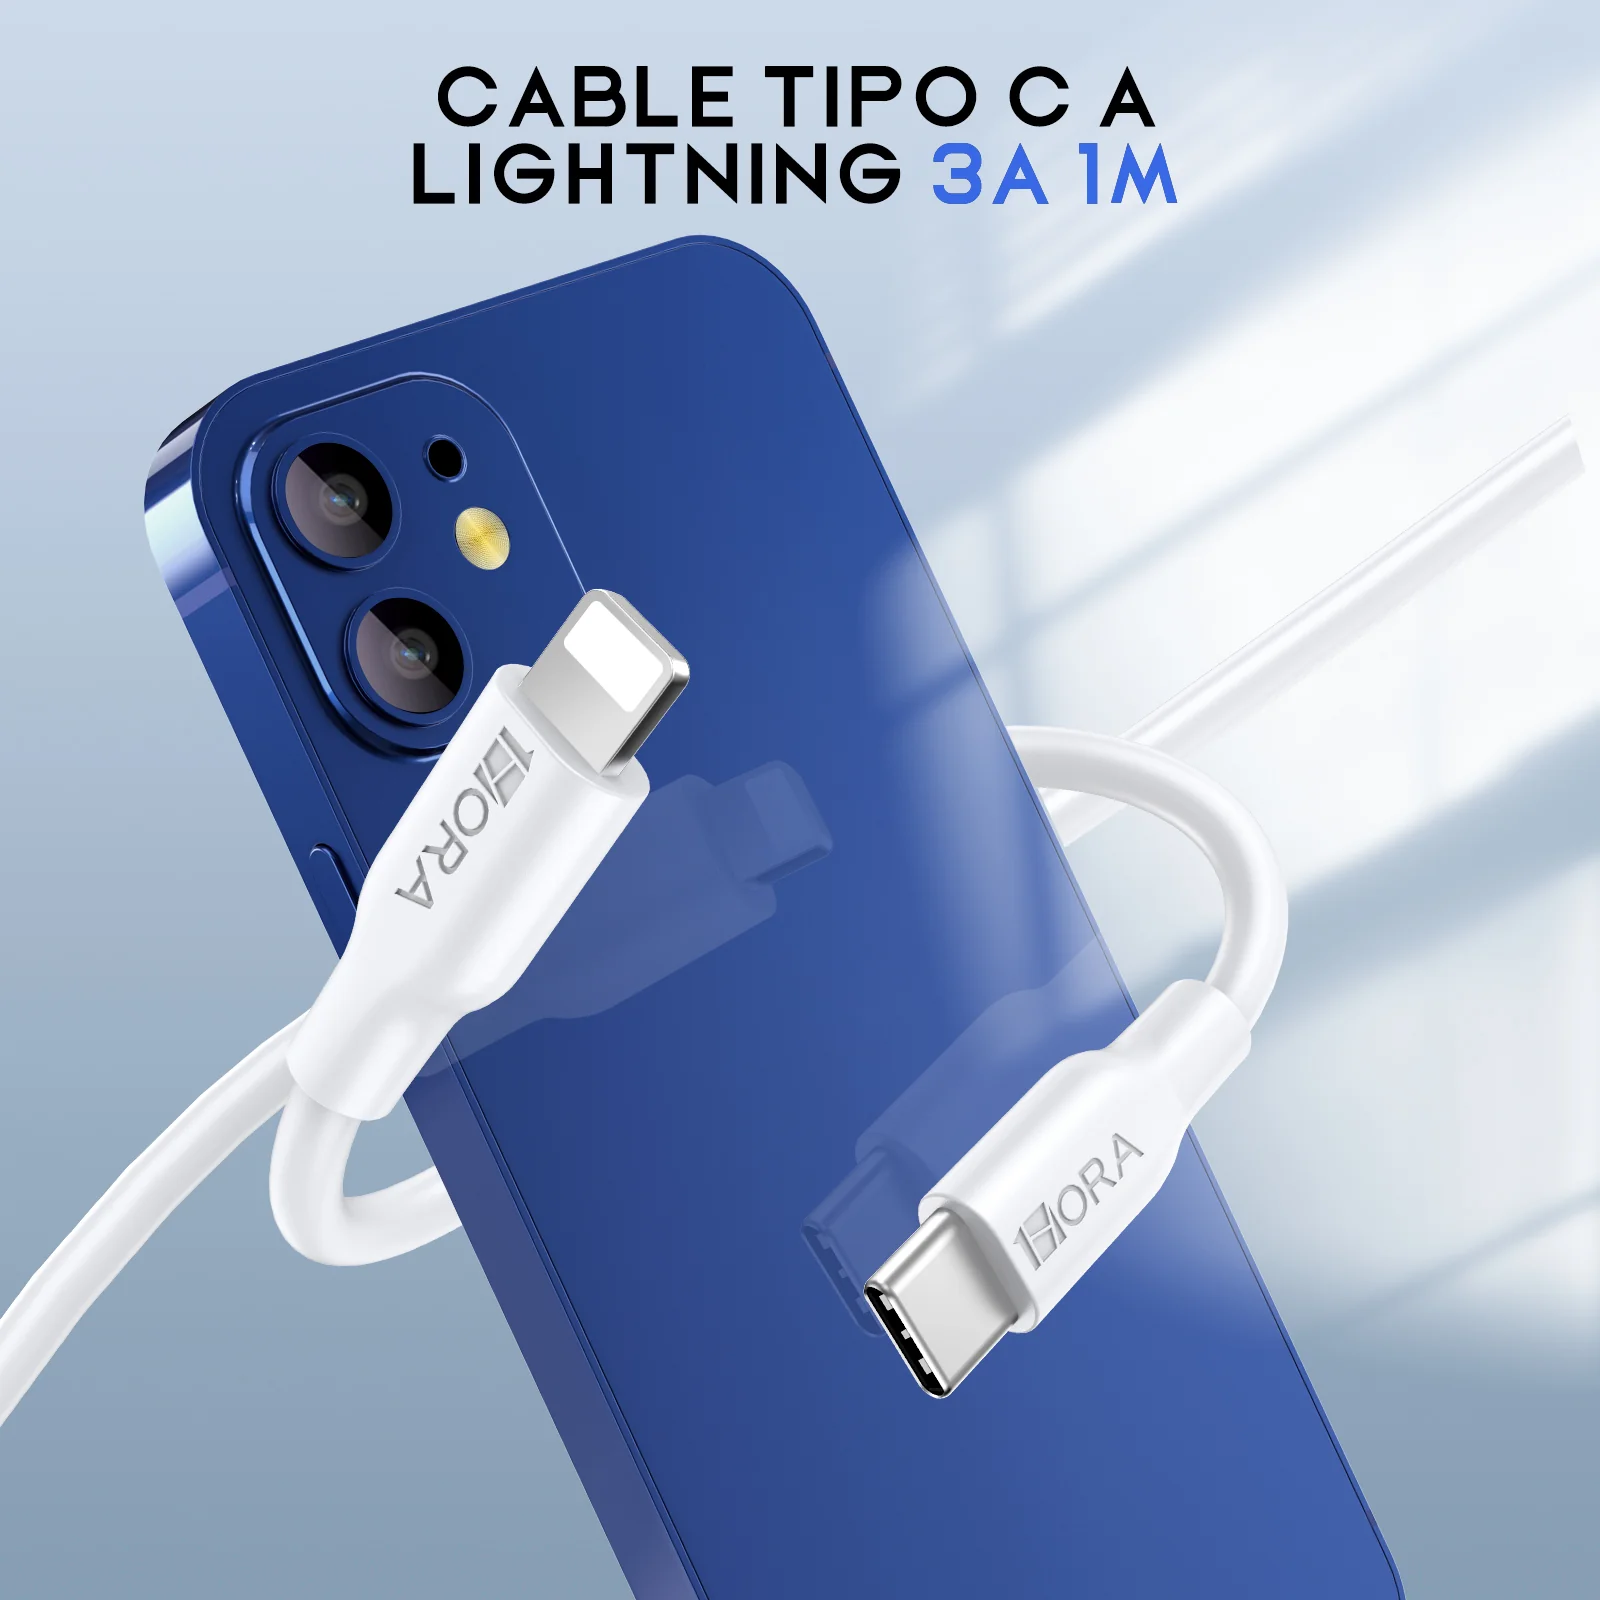 Cable Tipo C A Lightning 20w Carga Rápida 3A Para iPhone